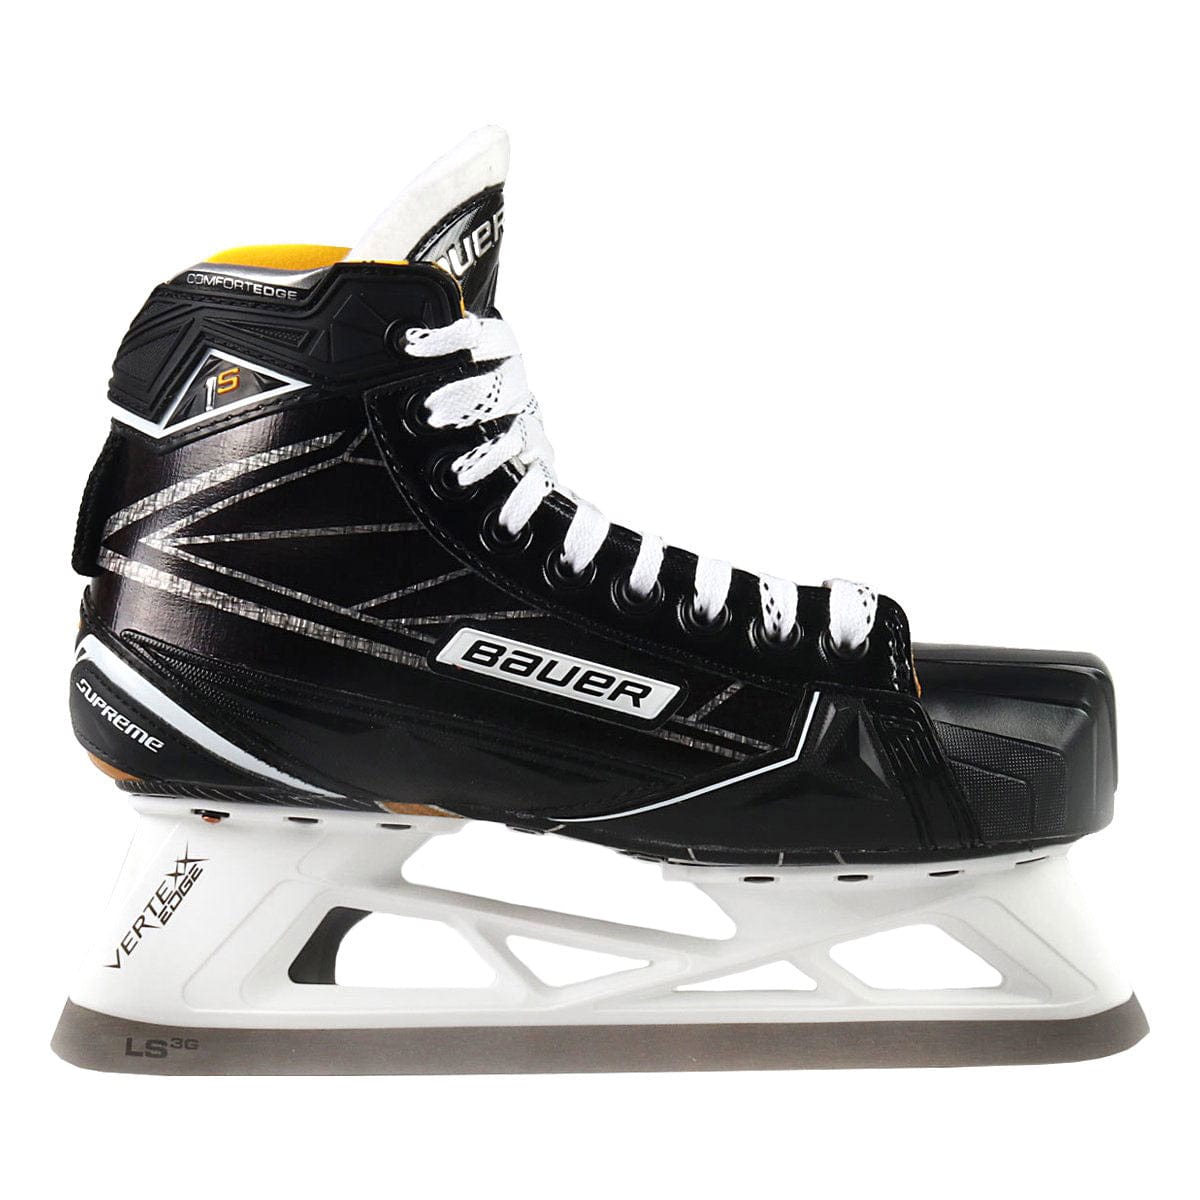 Bauer Supreme 1S Senior Goalie Skates - The Hockey Shop Source For Sports